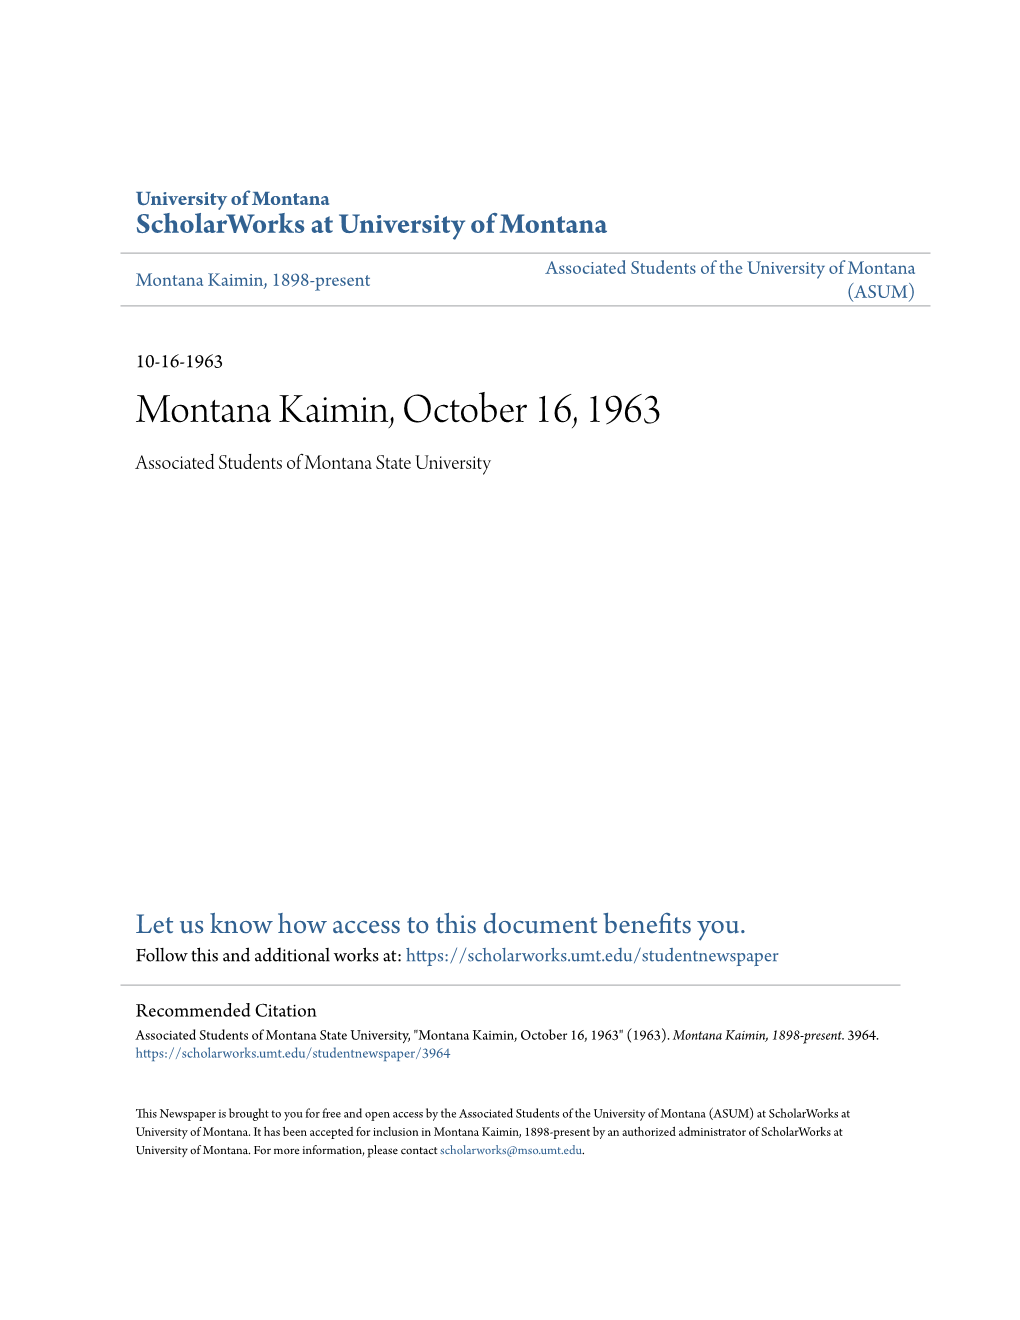 Montana Kaimin, October 16, 1963 Associated Students of Montana State University